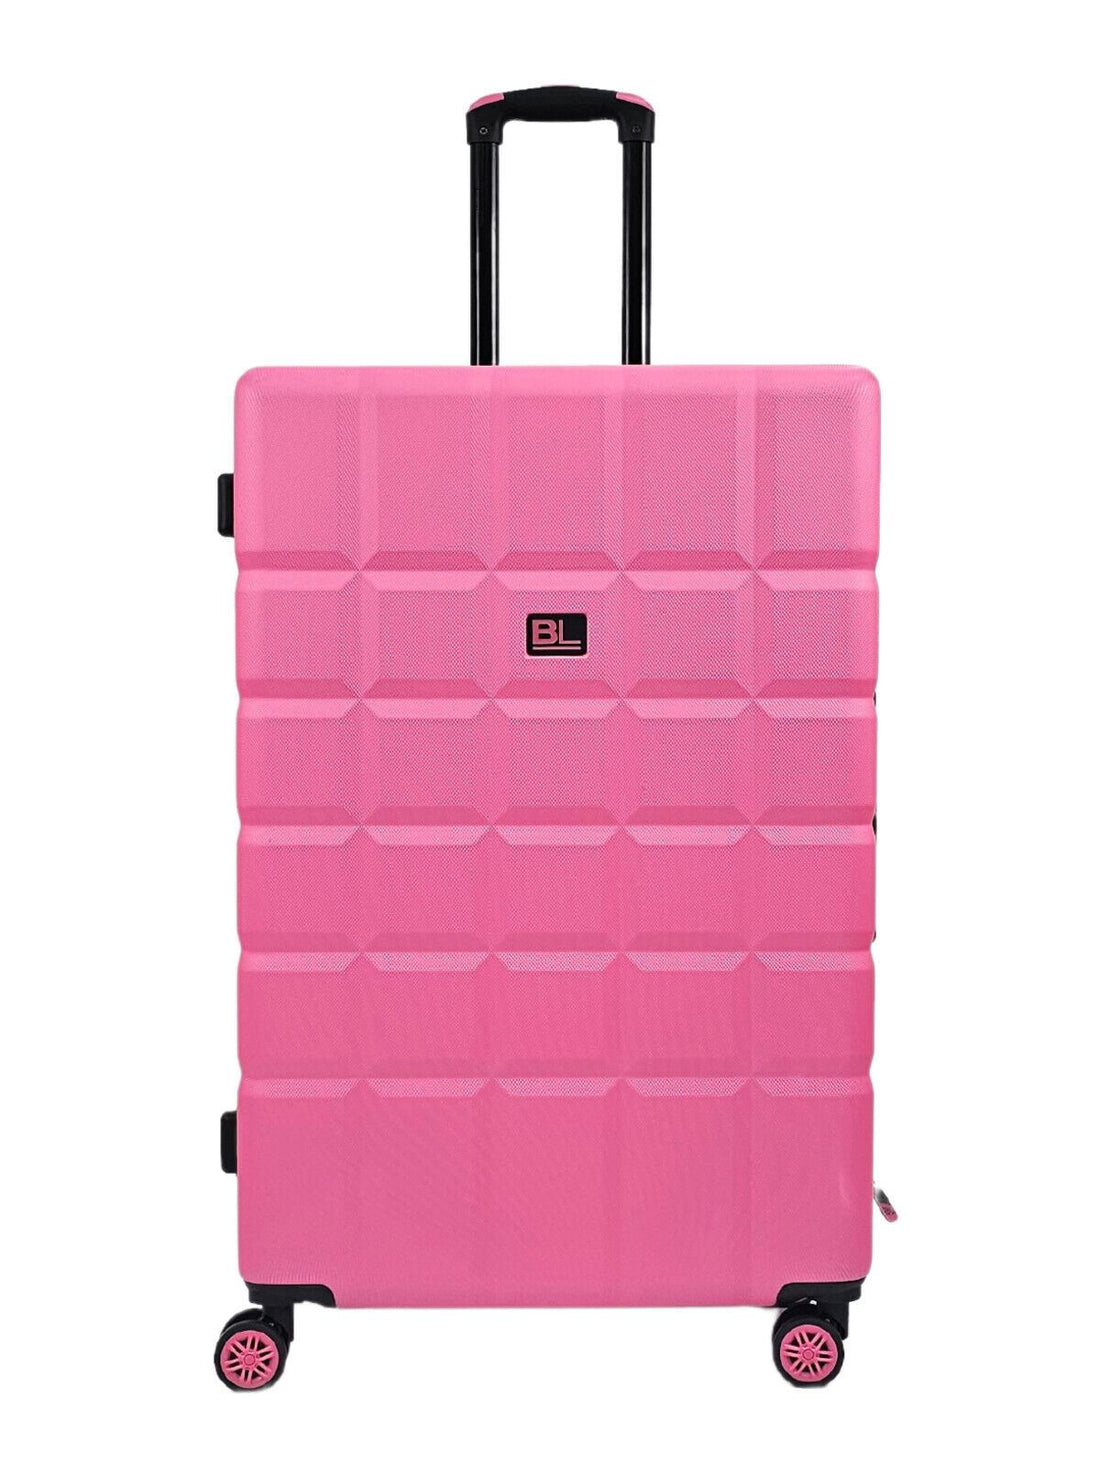 Pink Hard Shell Classic Suitcase Set 8 Wheel Cabin Luggage Case Travel Bag